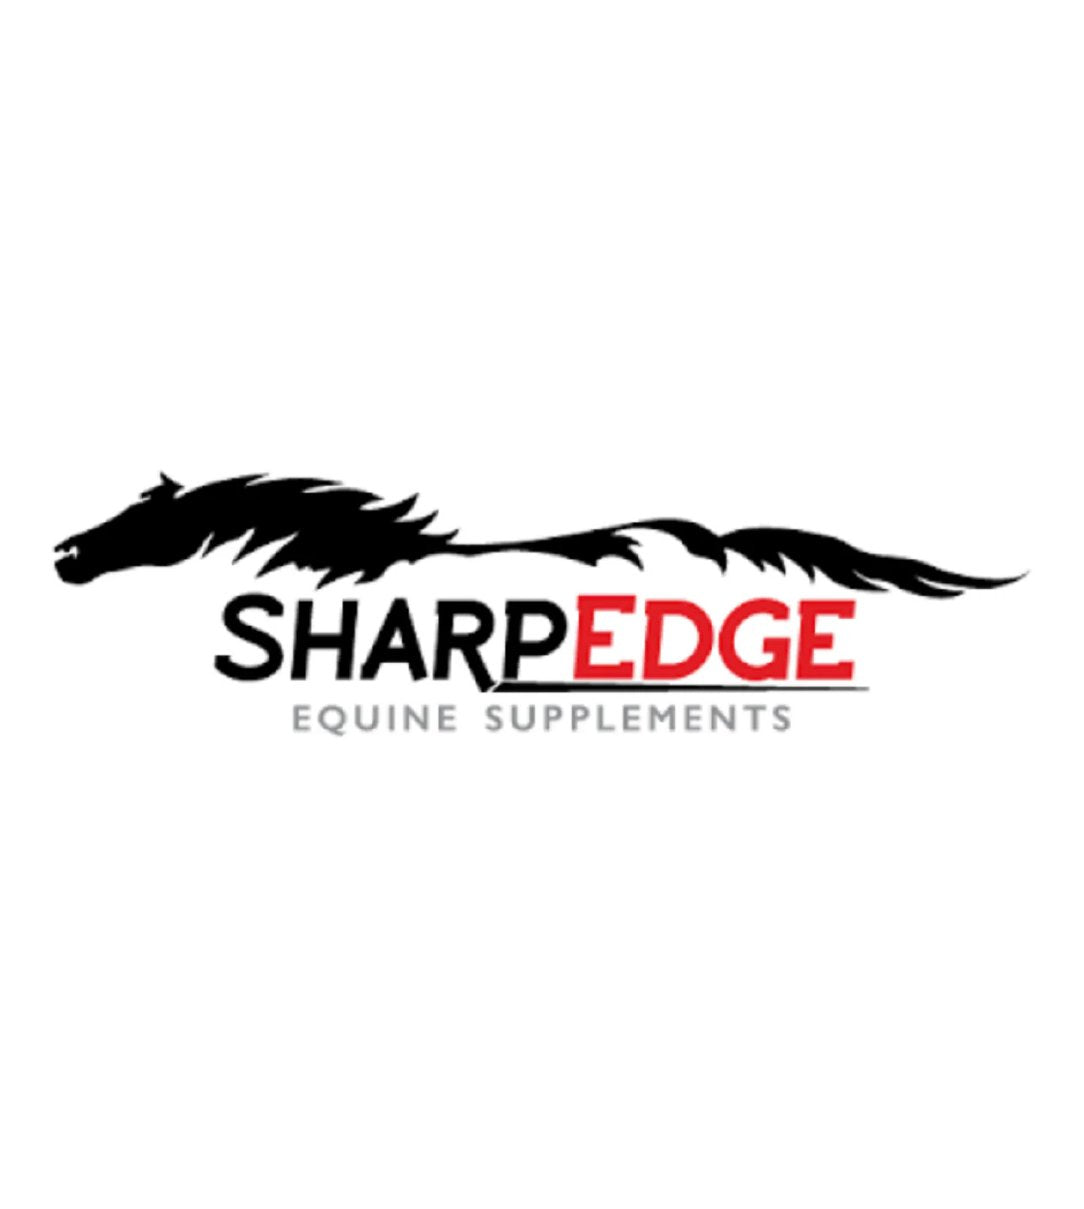 Sharpedge Equine Supplements